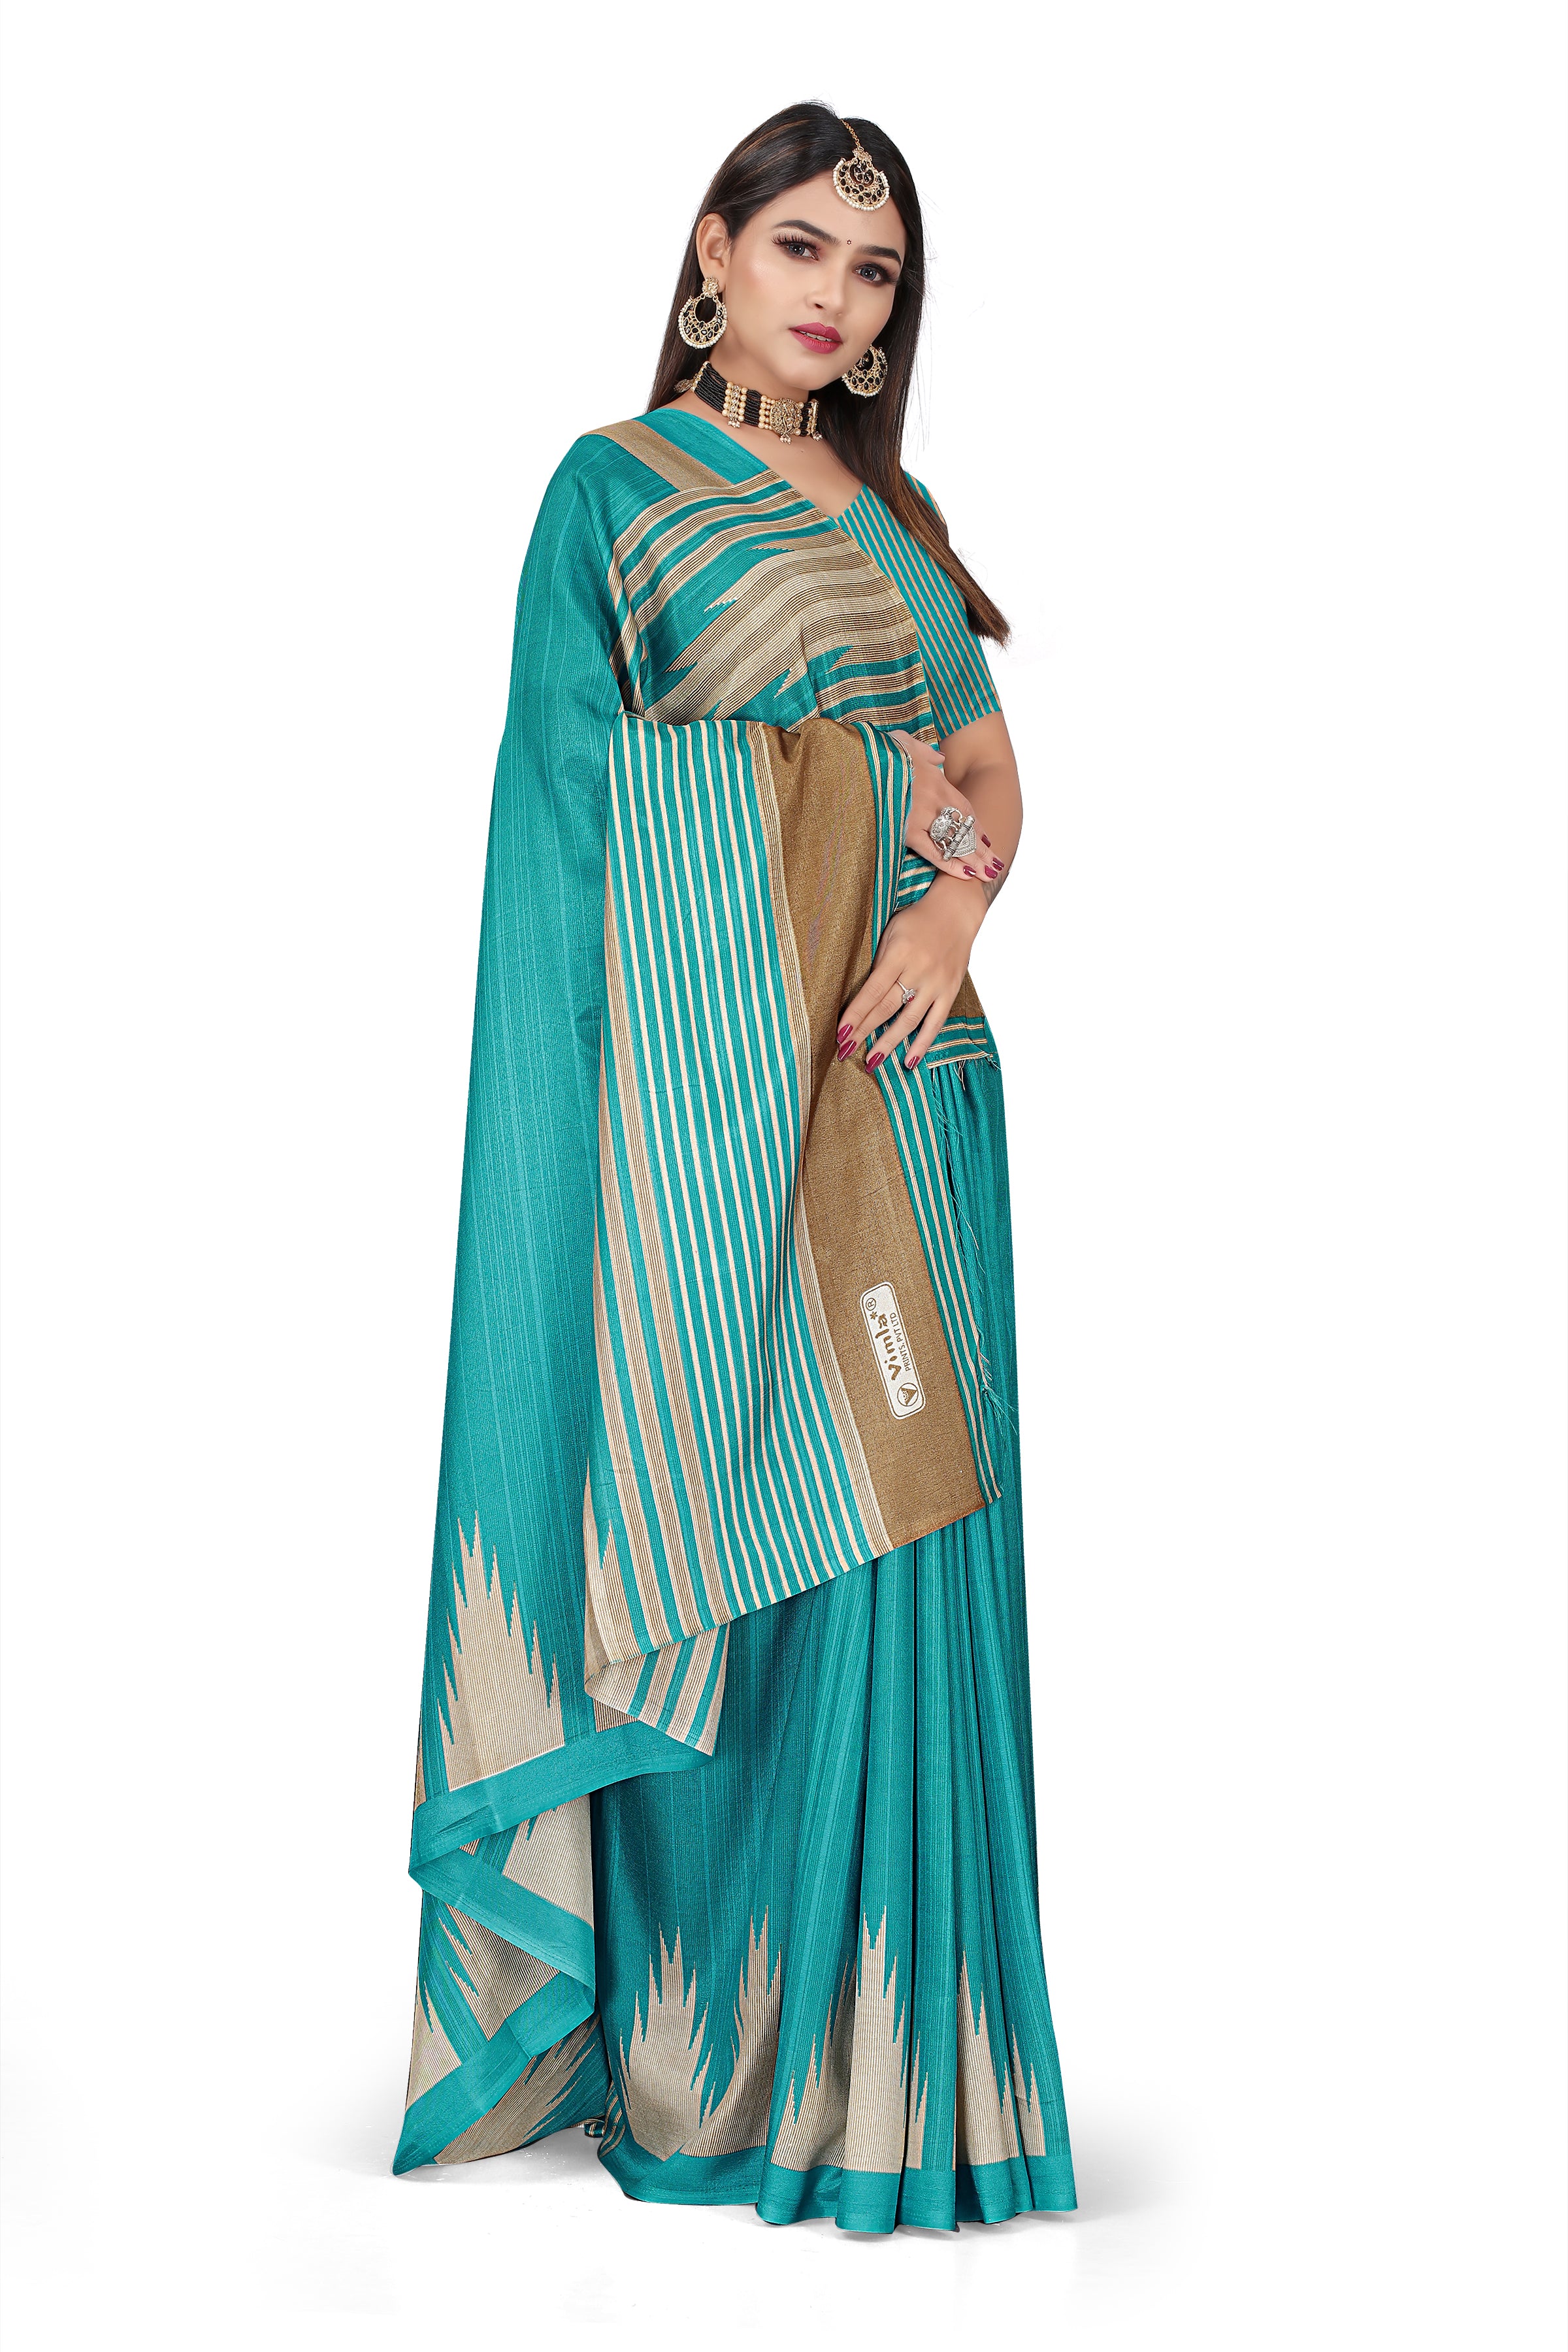 Vimla Prints Women's Turquoise Malgudi Art Silk Uniform Saree with Blouse Piece (2446_24)